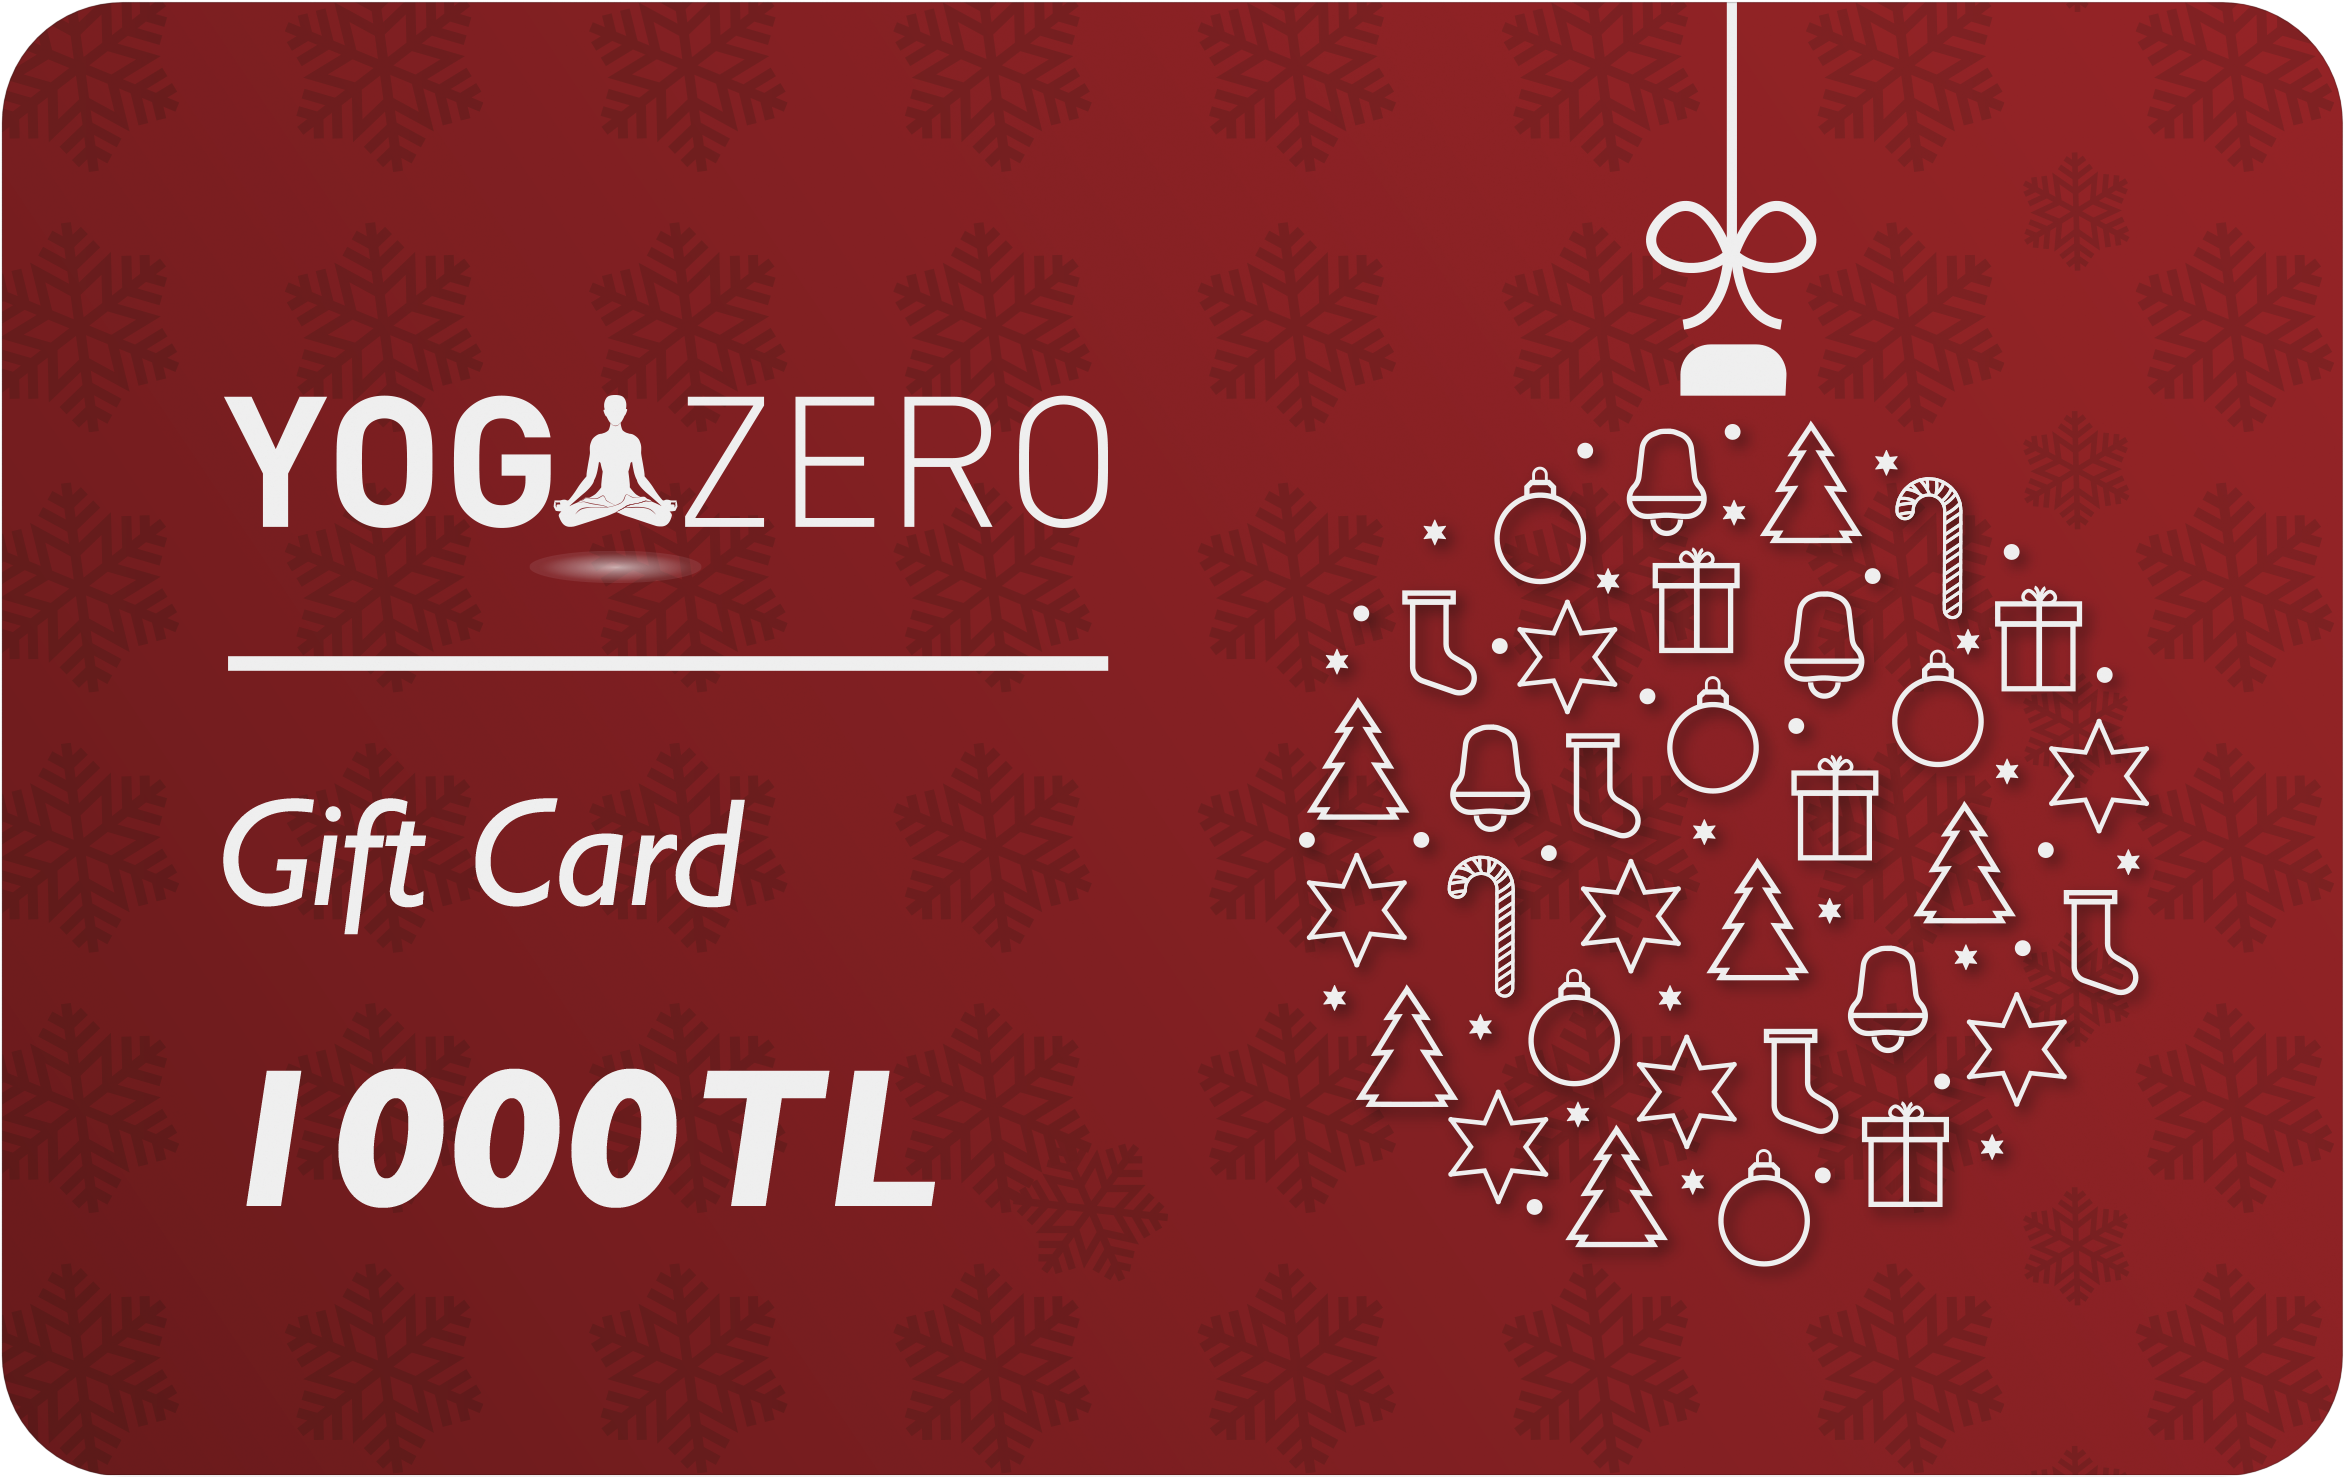 Yogazero Gift Card - 1000.-TL